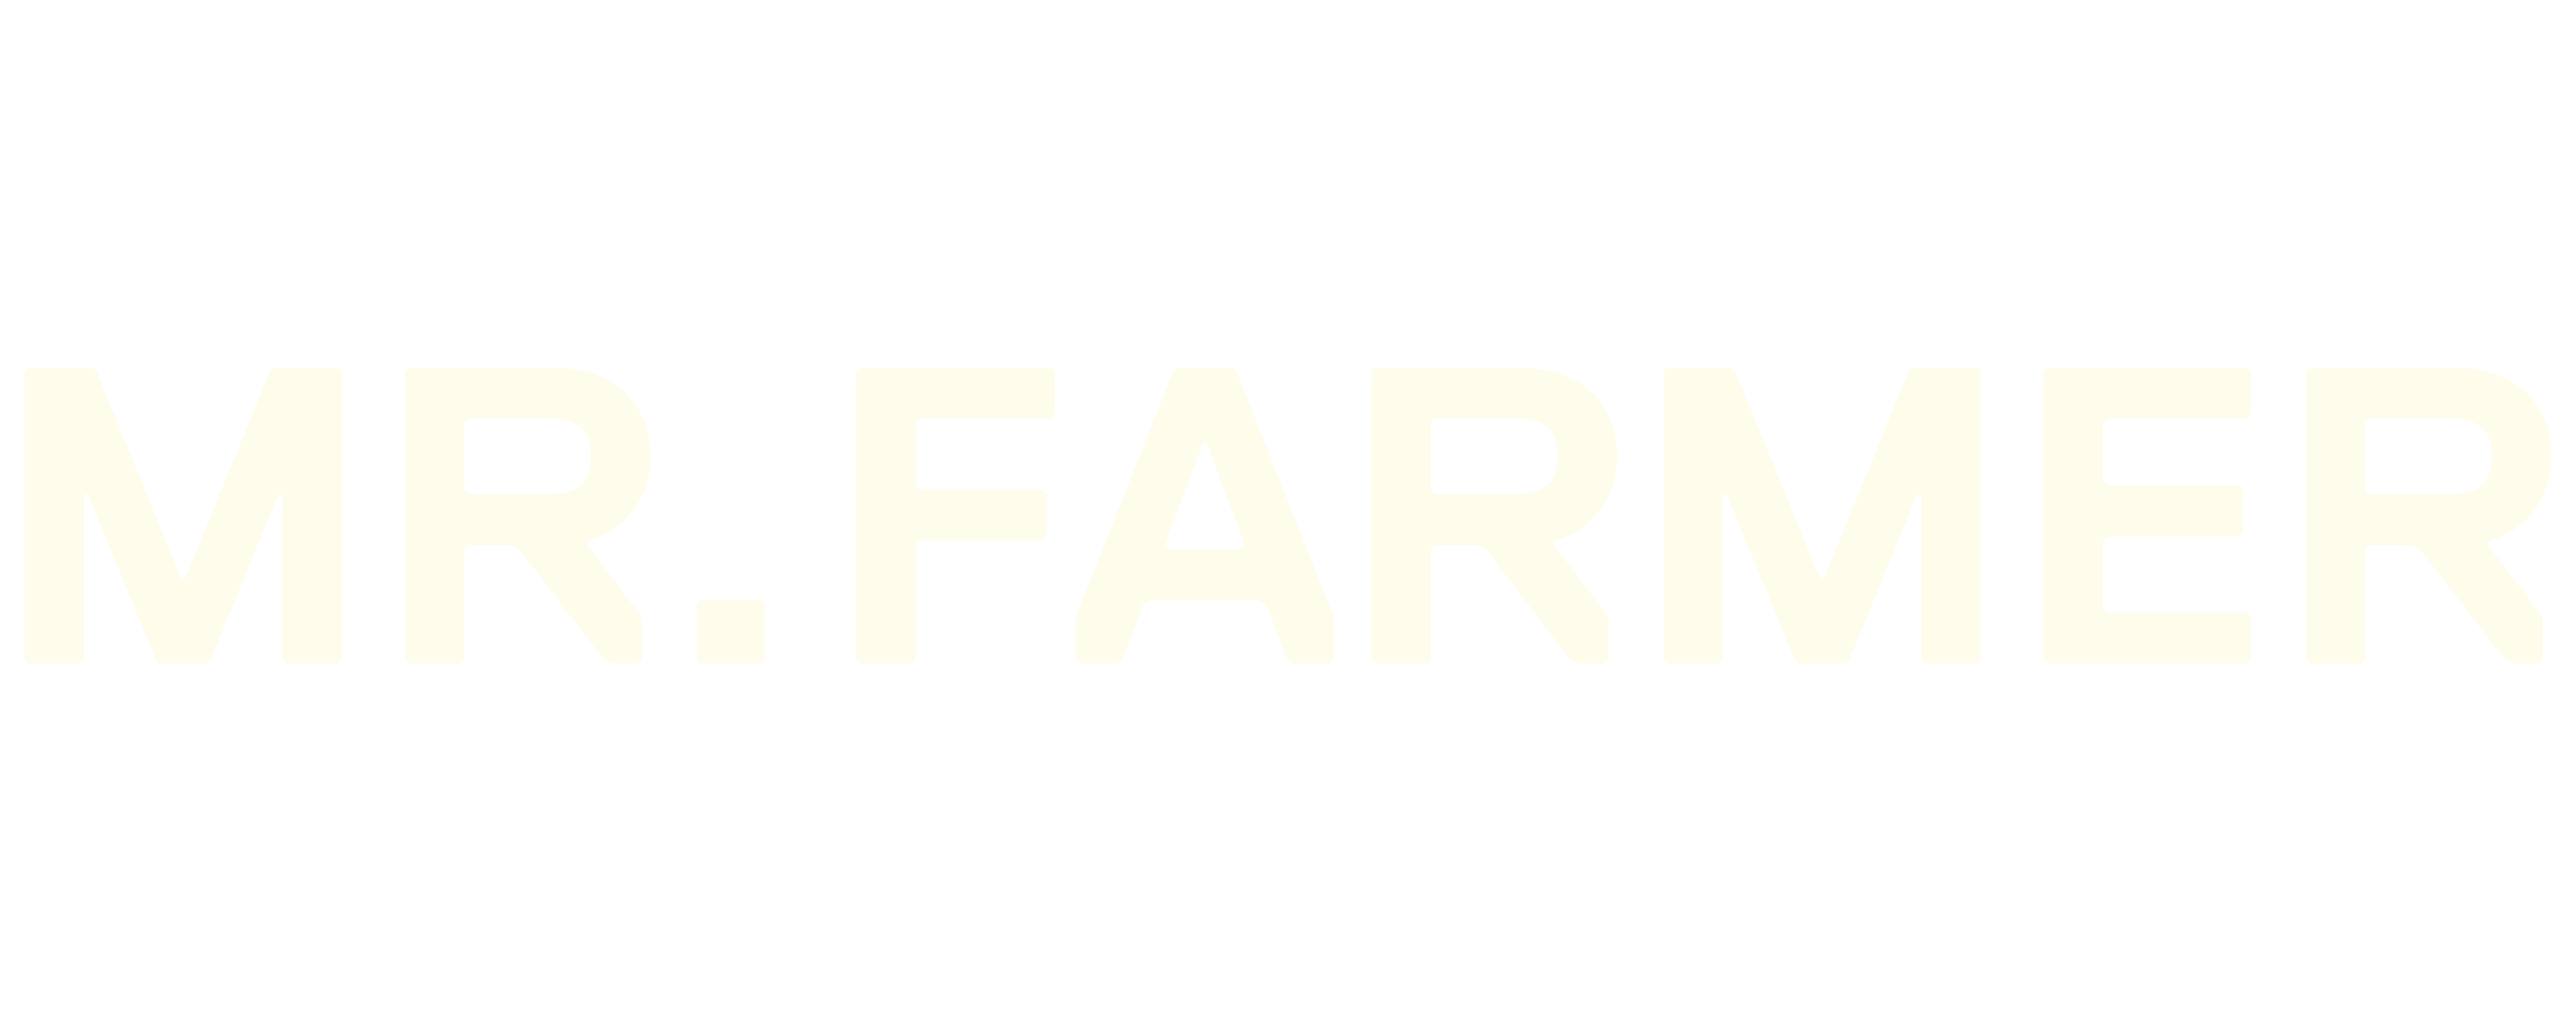 Mr. Farmer